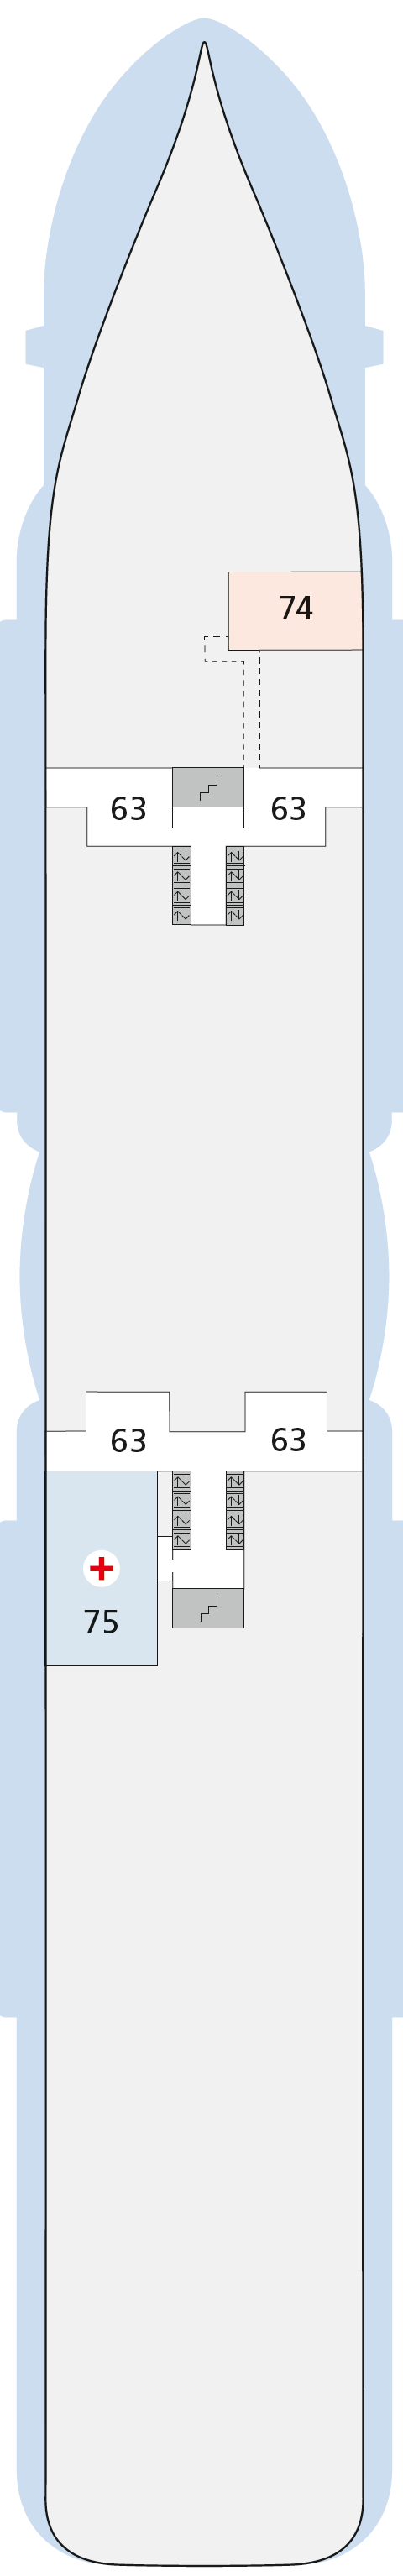 Deck 3